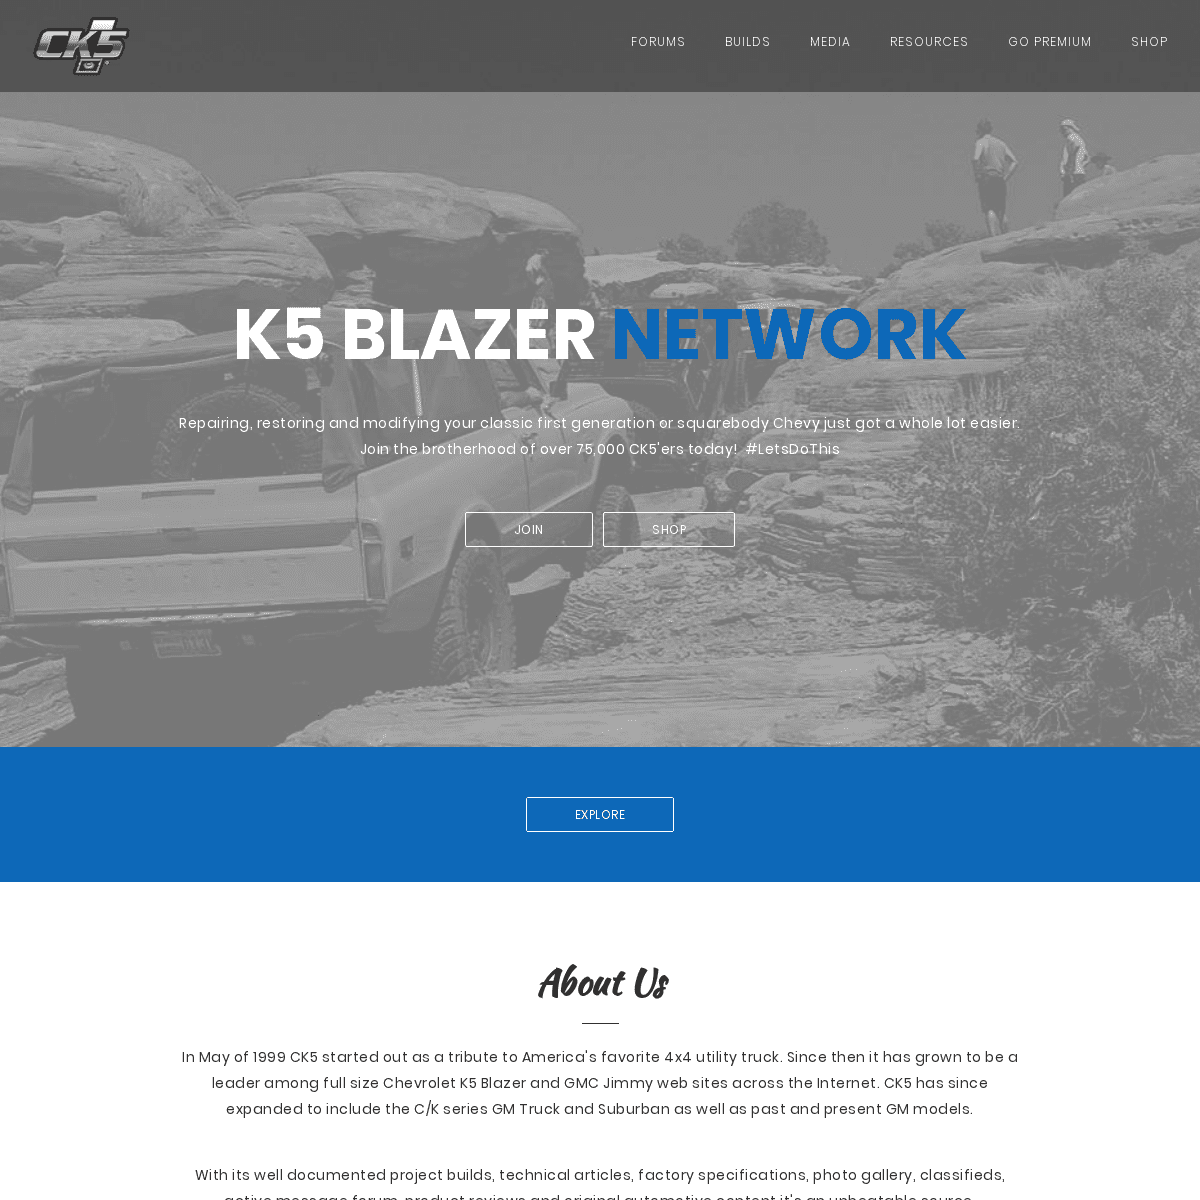 K5 Blazer Network